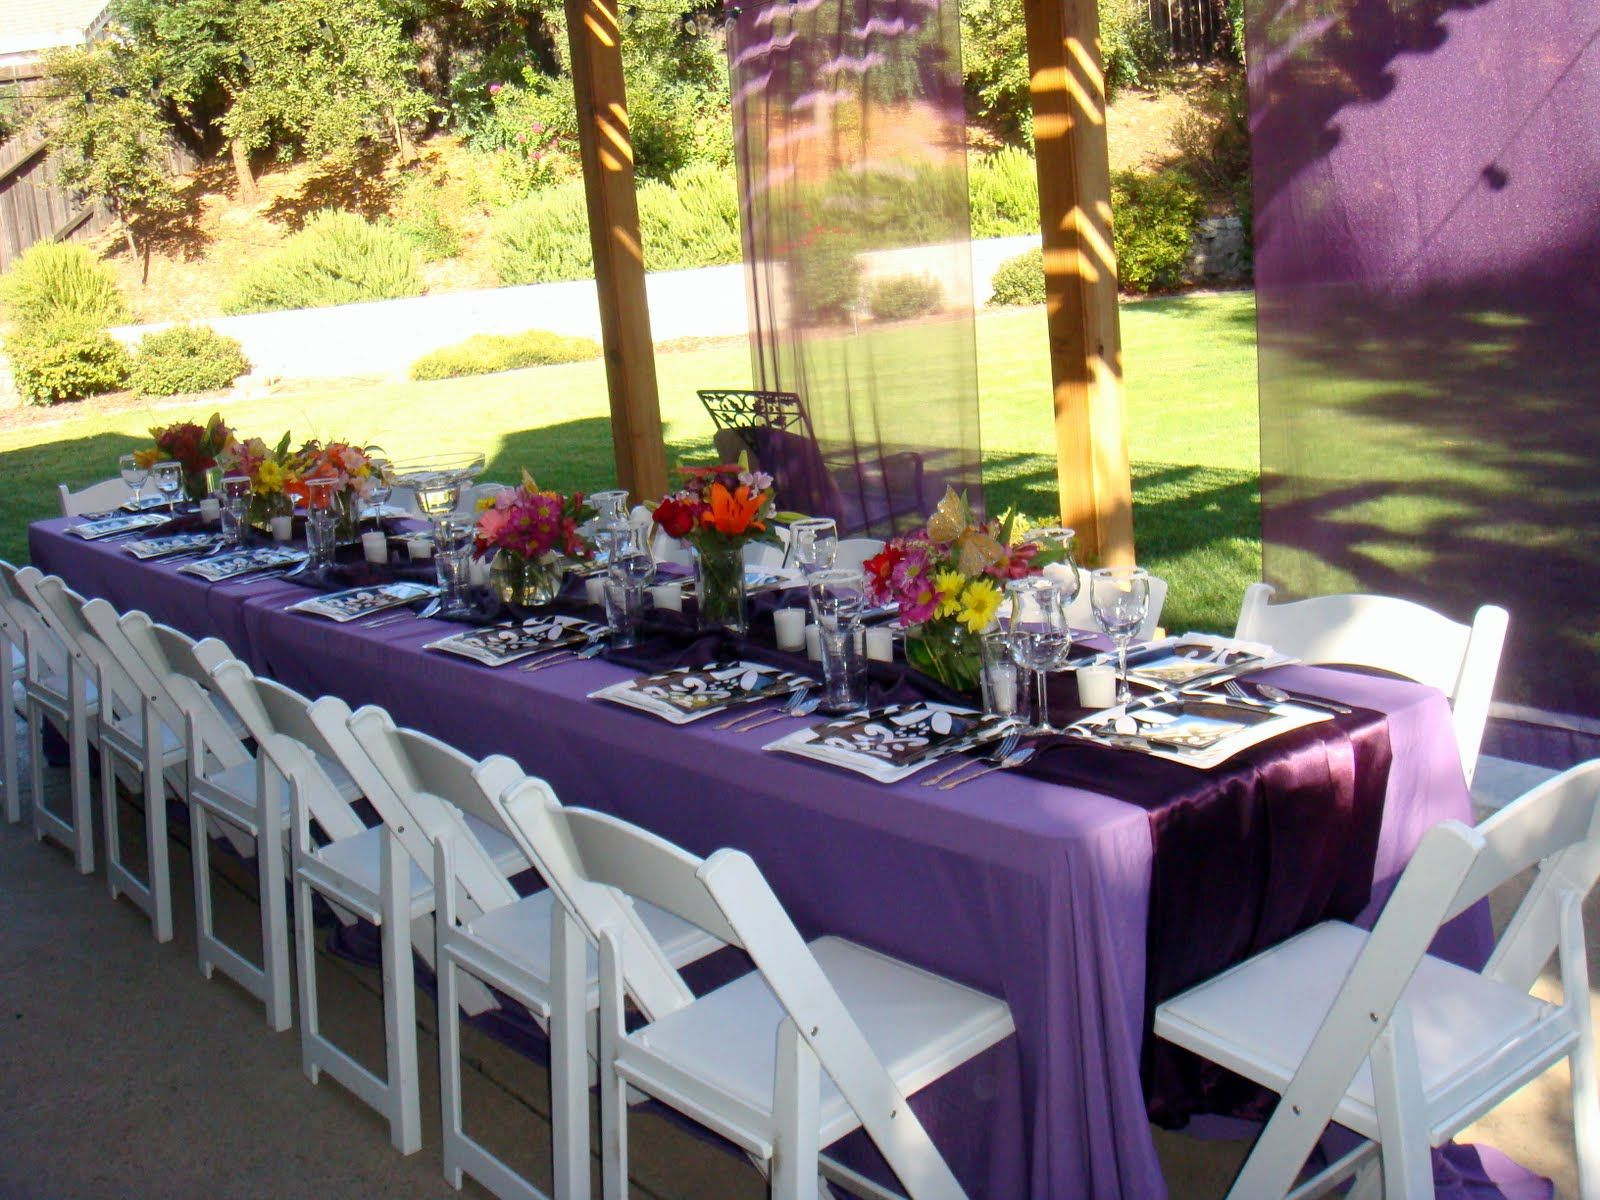 High School Graduation Backyard Party Ideas
 tablescapes for outdoor graduation party